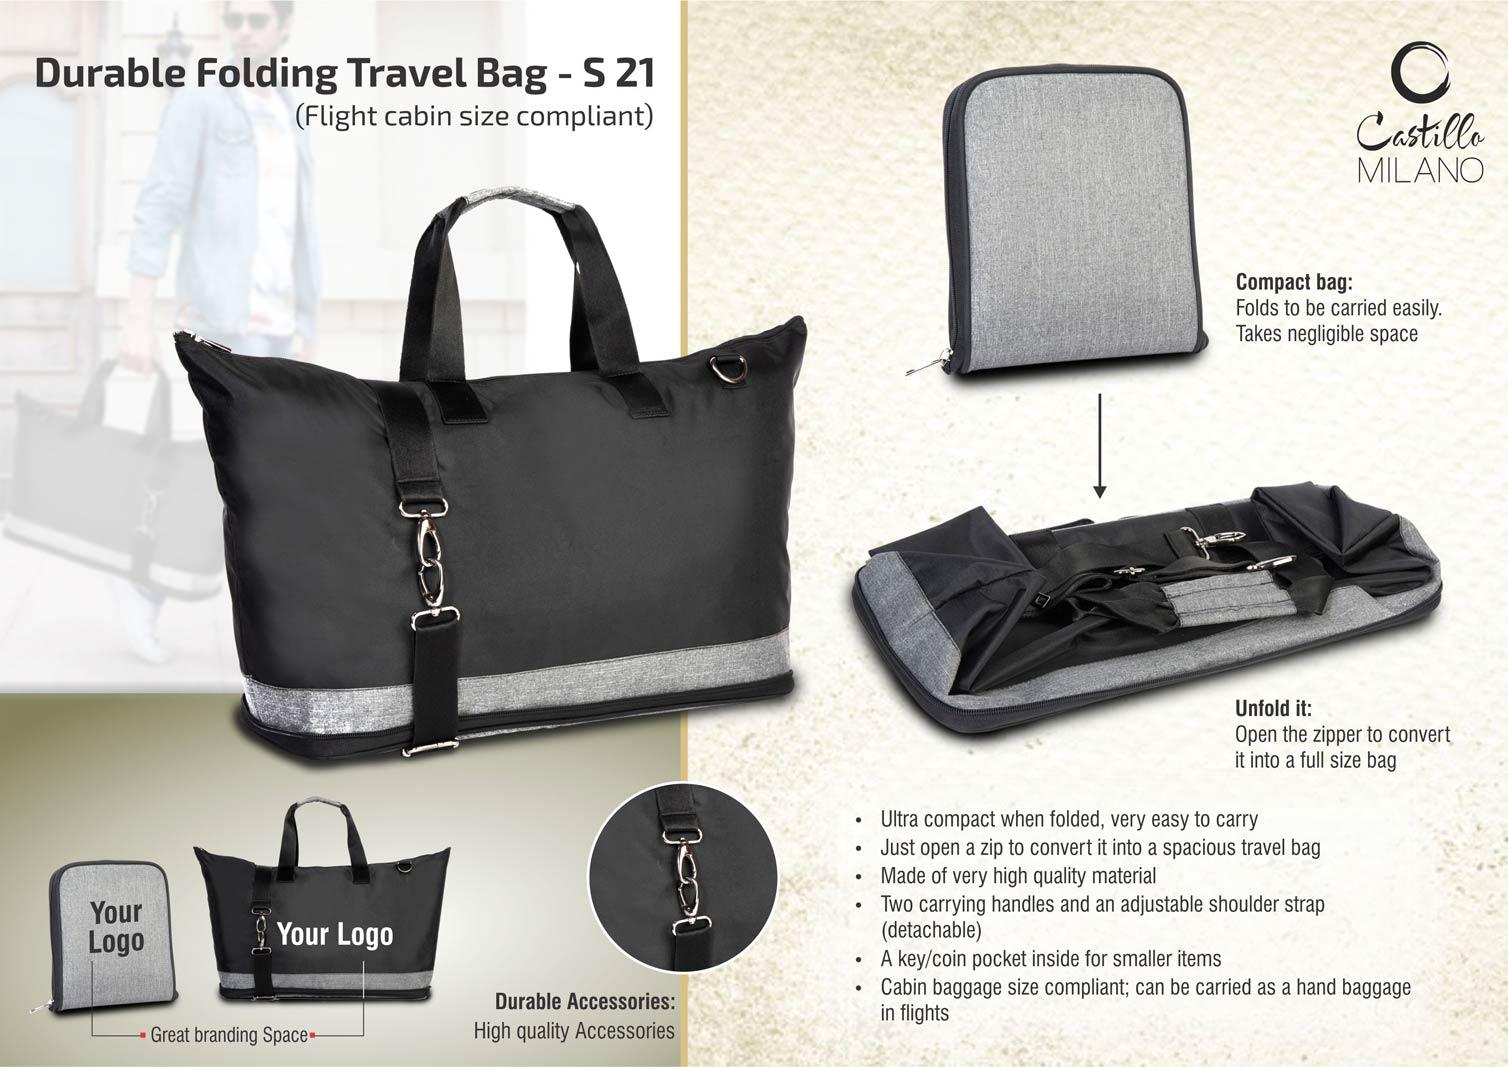 DIY COMPACT FOLDING BAG | How to Make Reusable Shopping Bag EASY  [sewingtimes] - YouTube